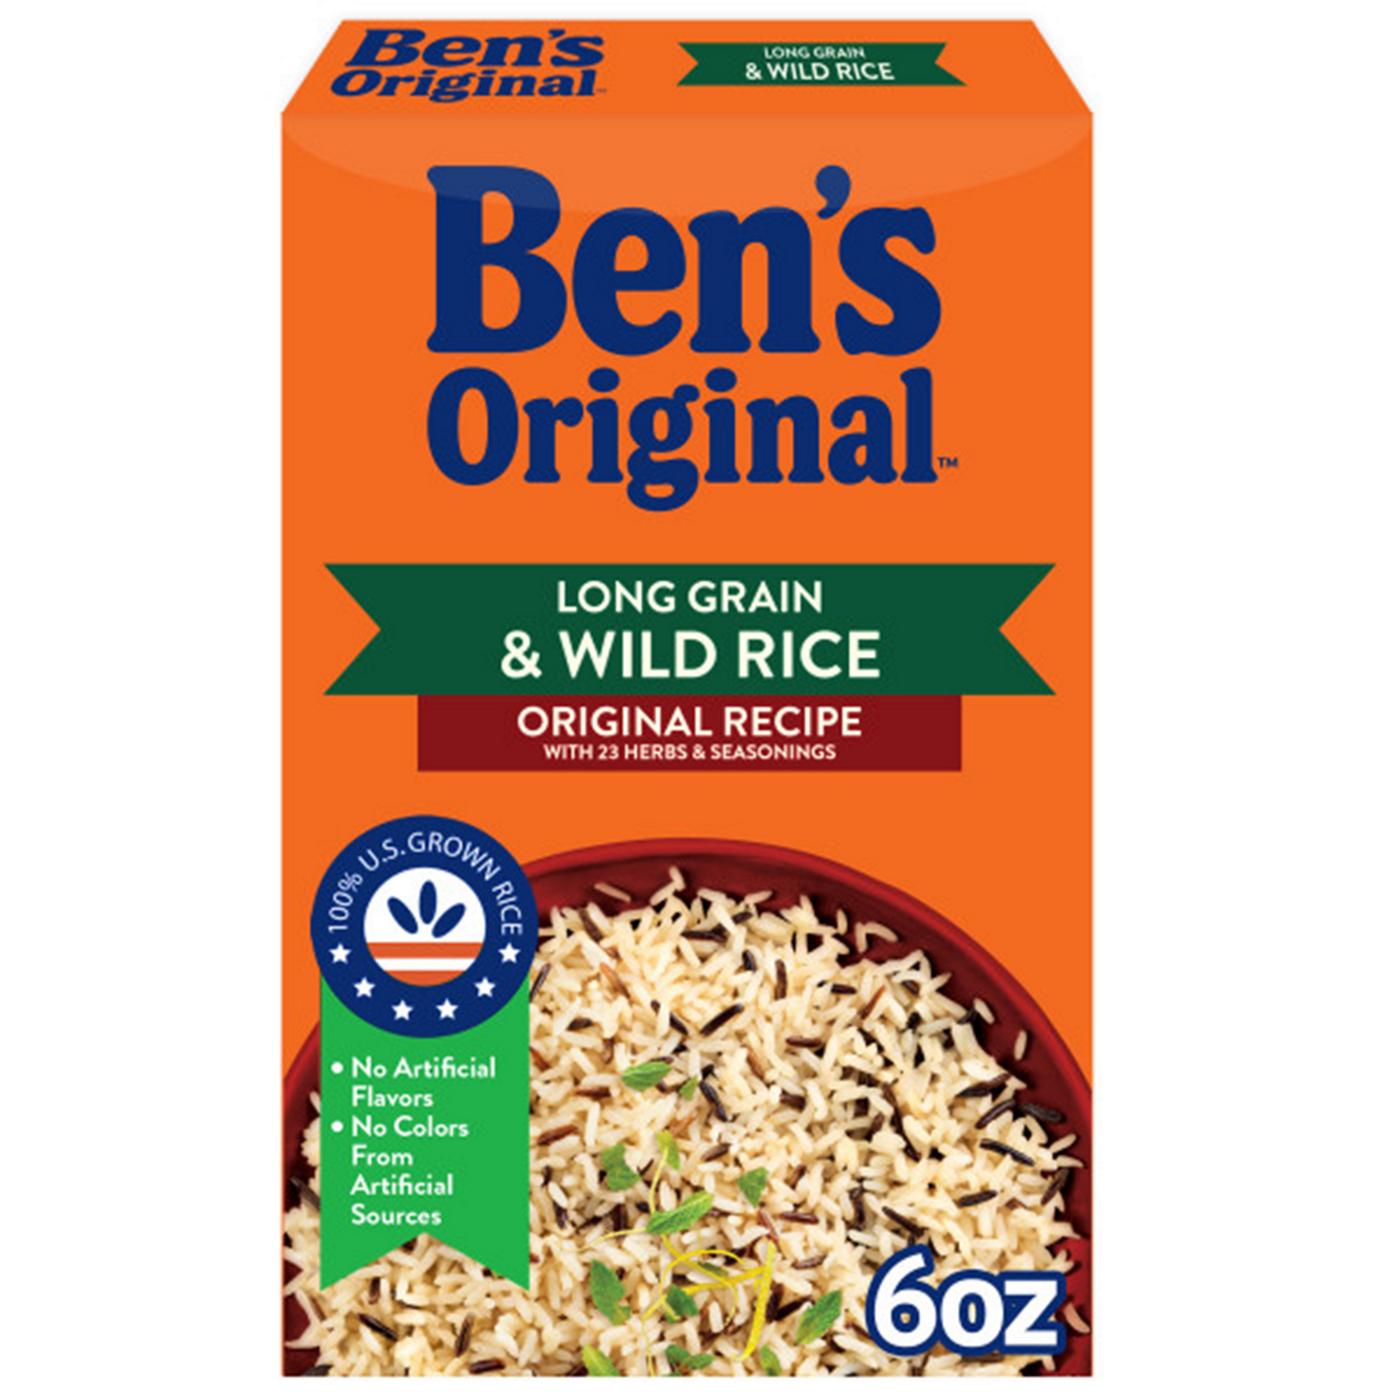 Ben's Original Long Grain & Wild Rice - Original; image 1 of 6